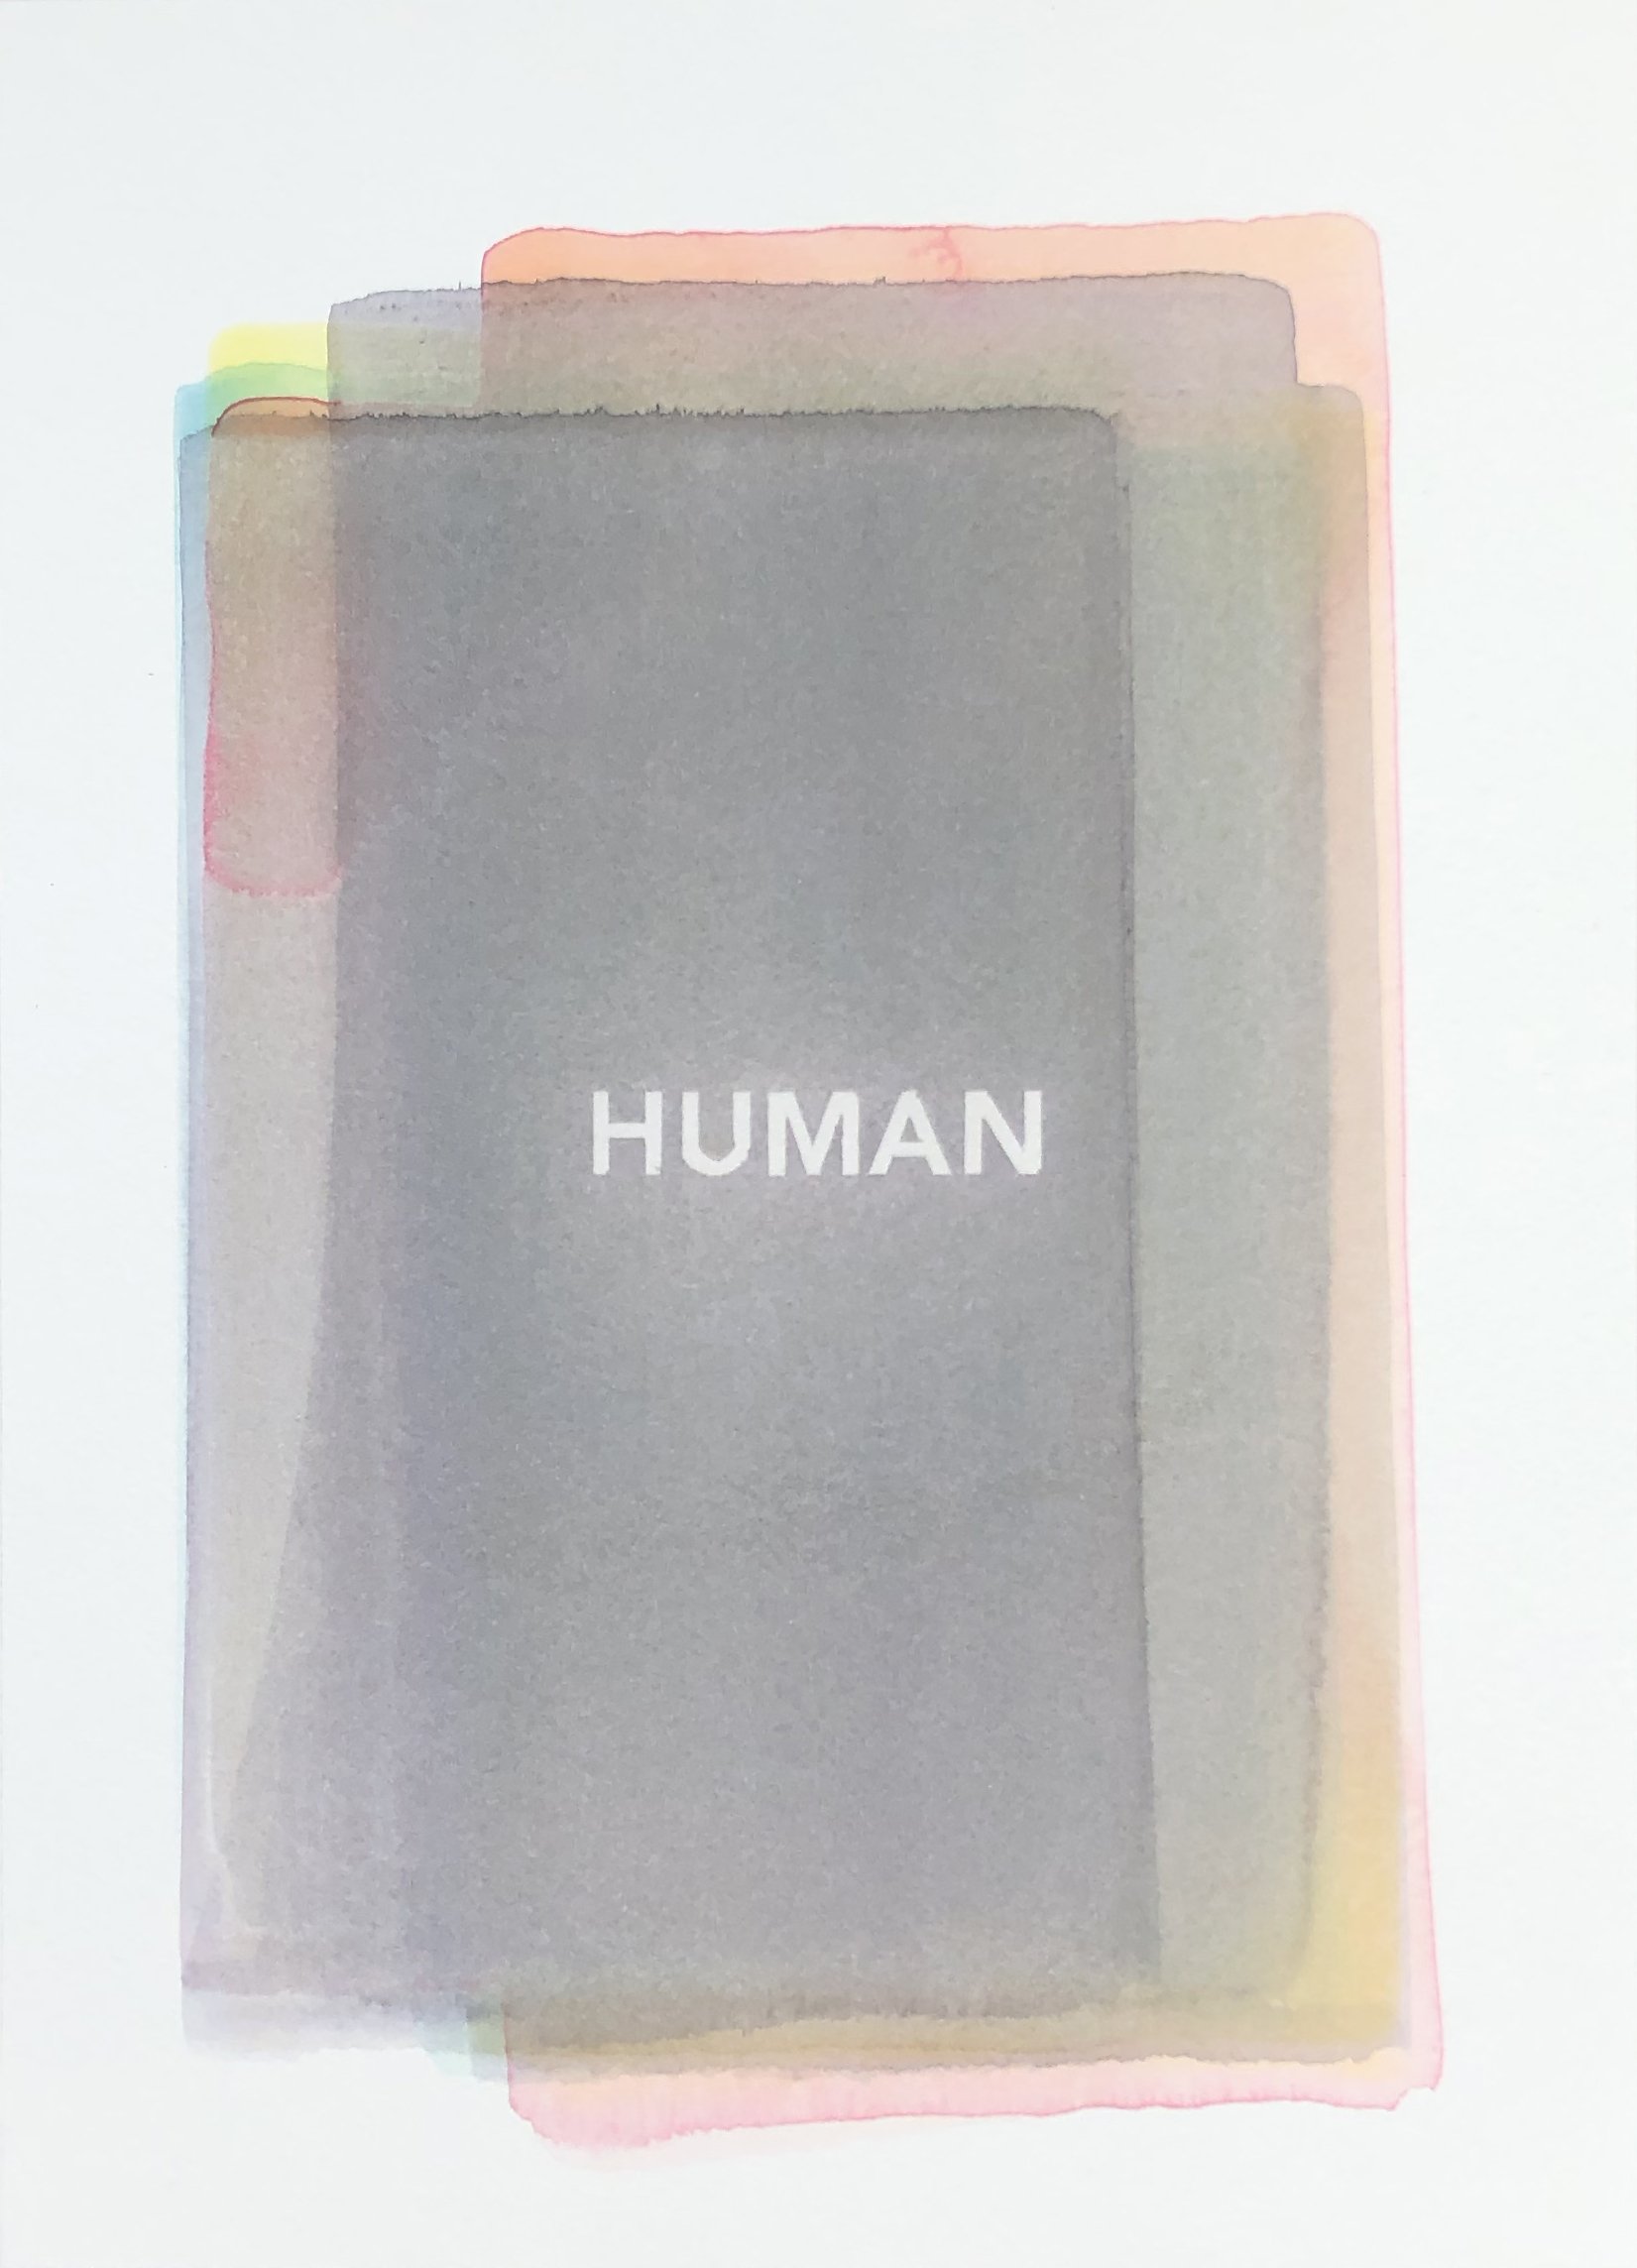   Human V . 2020. watercolour on paper. 36x26cm. 